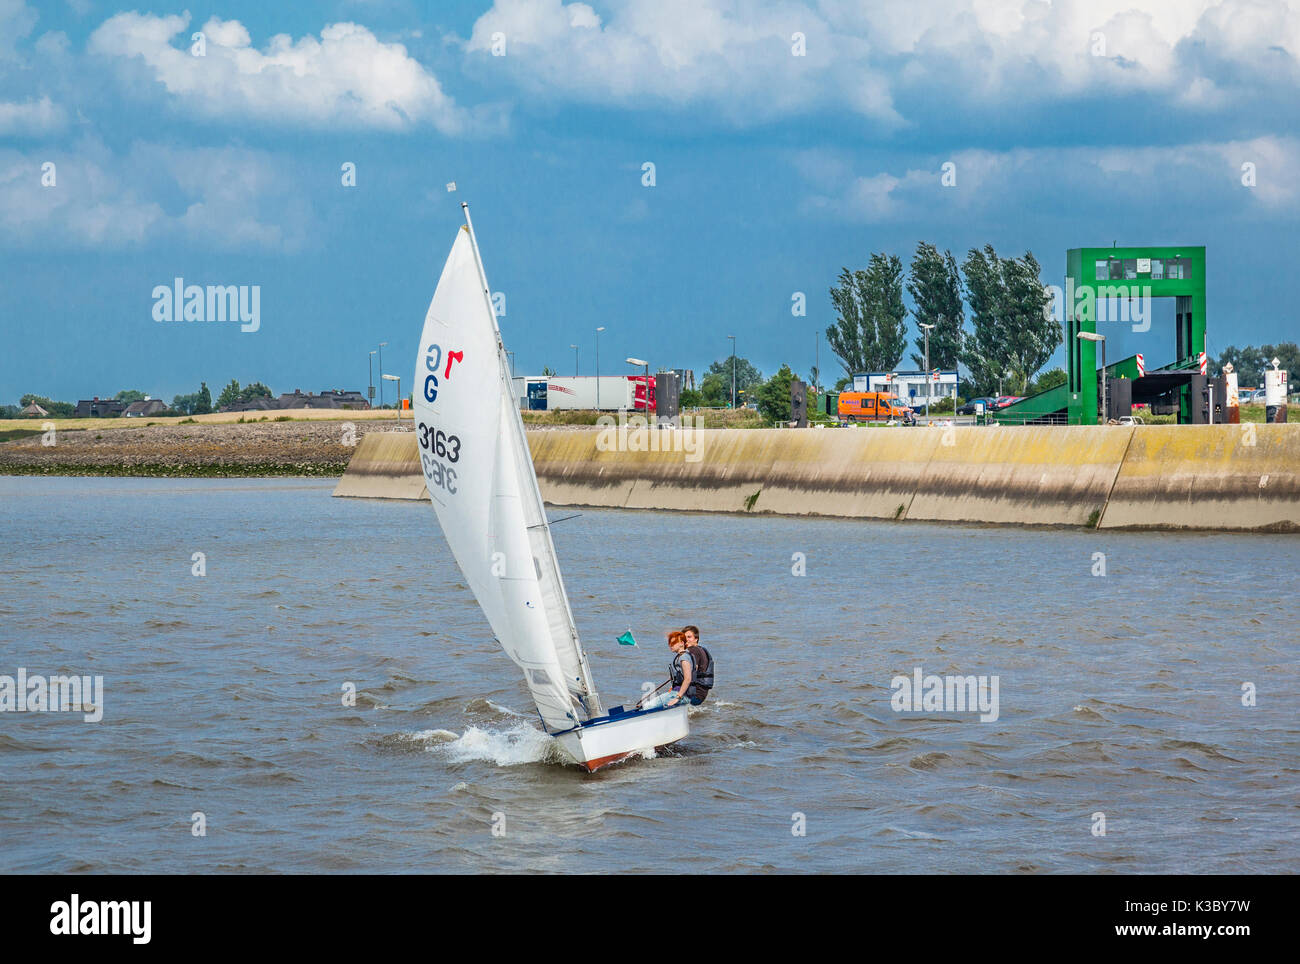 Germany, Lower Saxony/Schleswig-Holstein, sailing the Elbe River between Wischhafen and Glückstadt Stock Photo